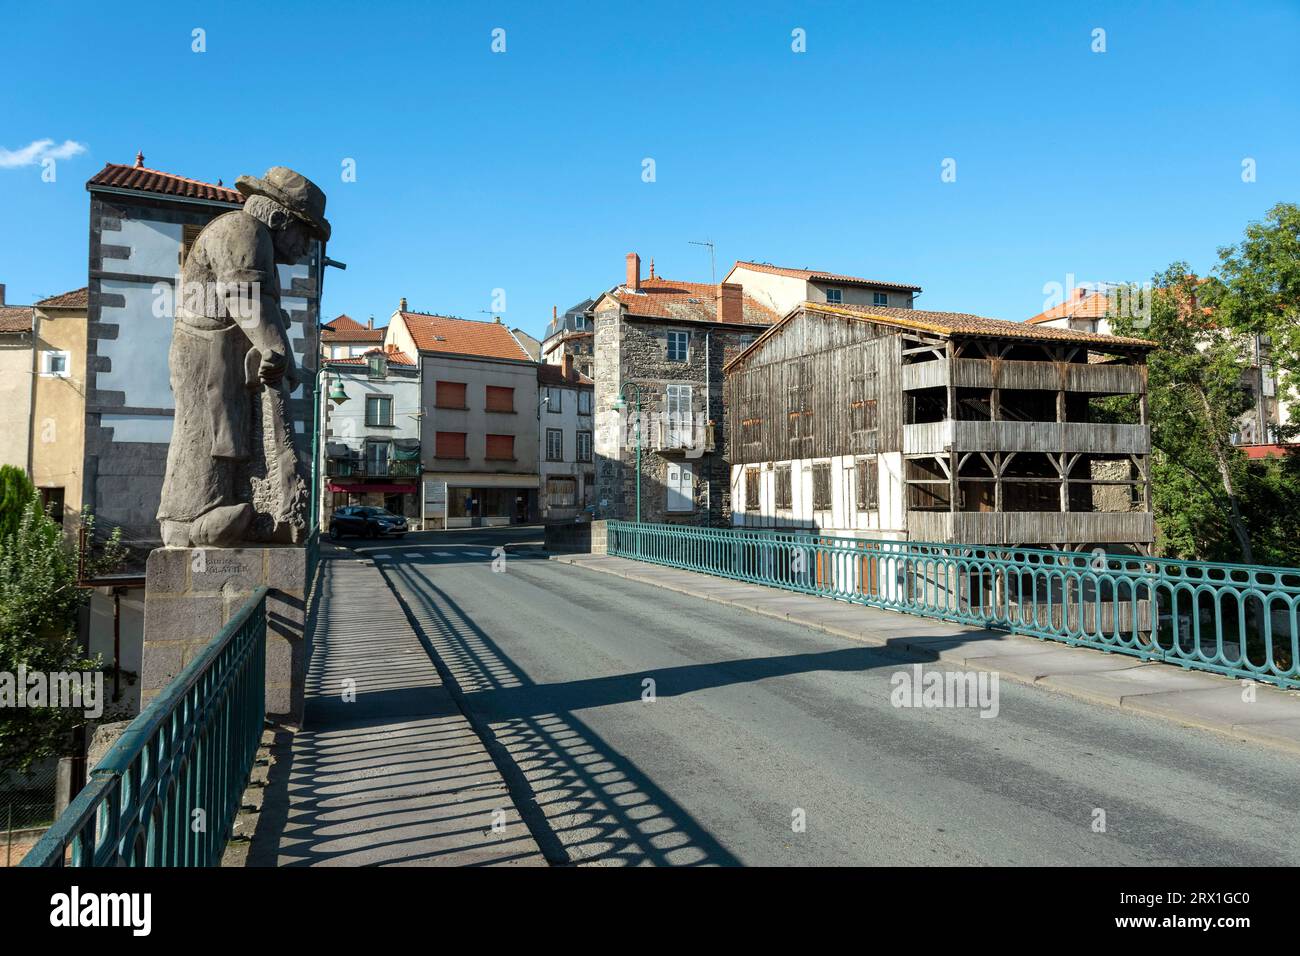 Maringues. The monumental sculpture of the tanner on the bridge. Puy de Dome dapartment. Auvergne-Rhone-Alpes. France Stock Photo